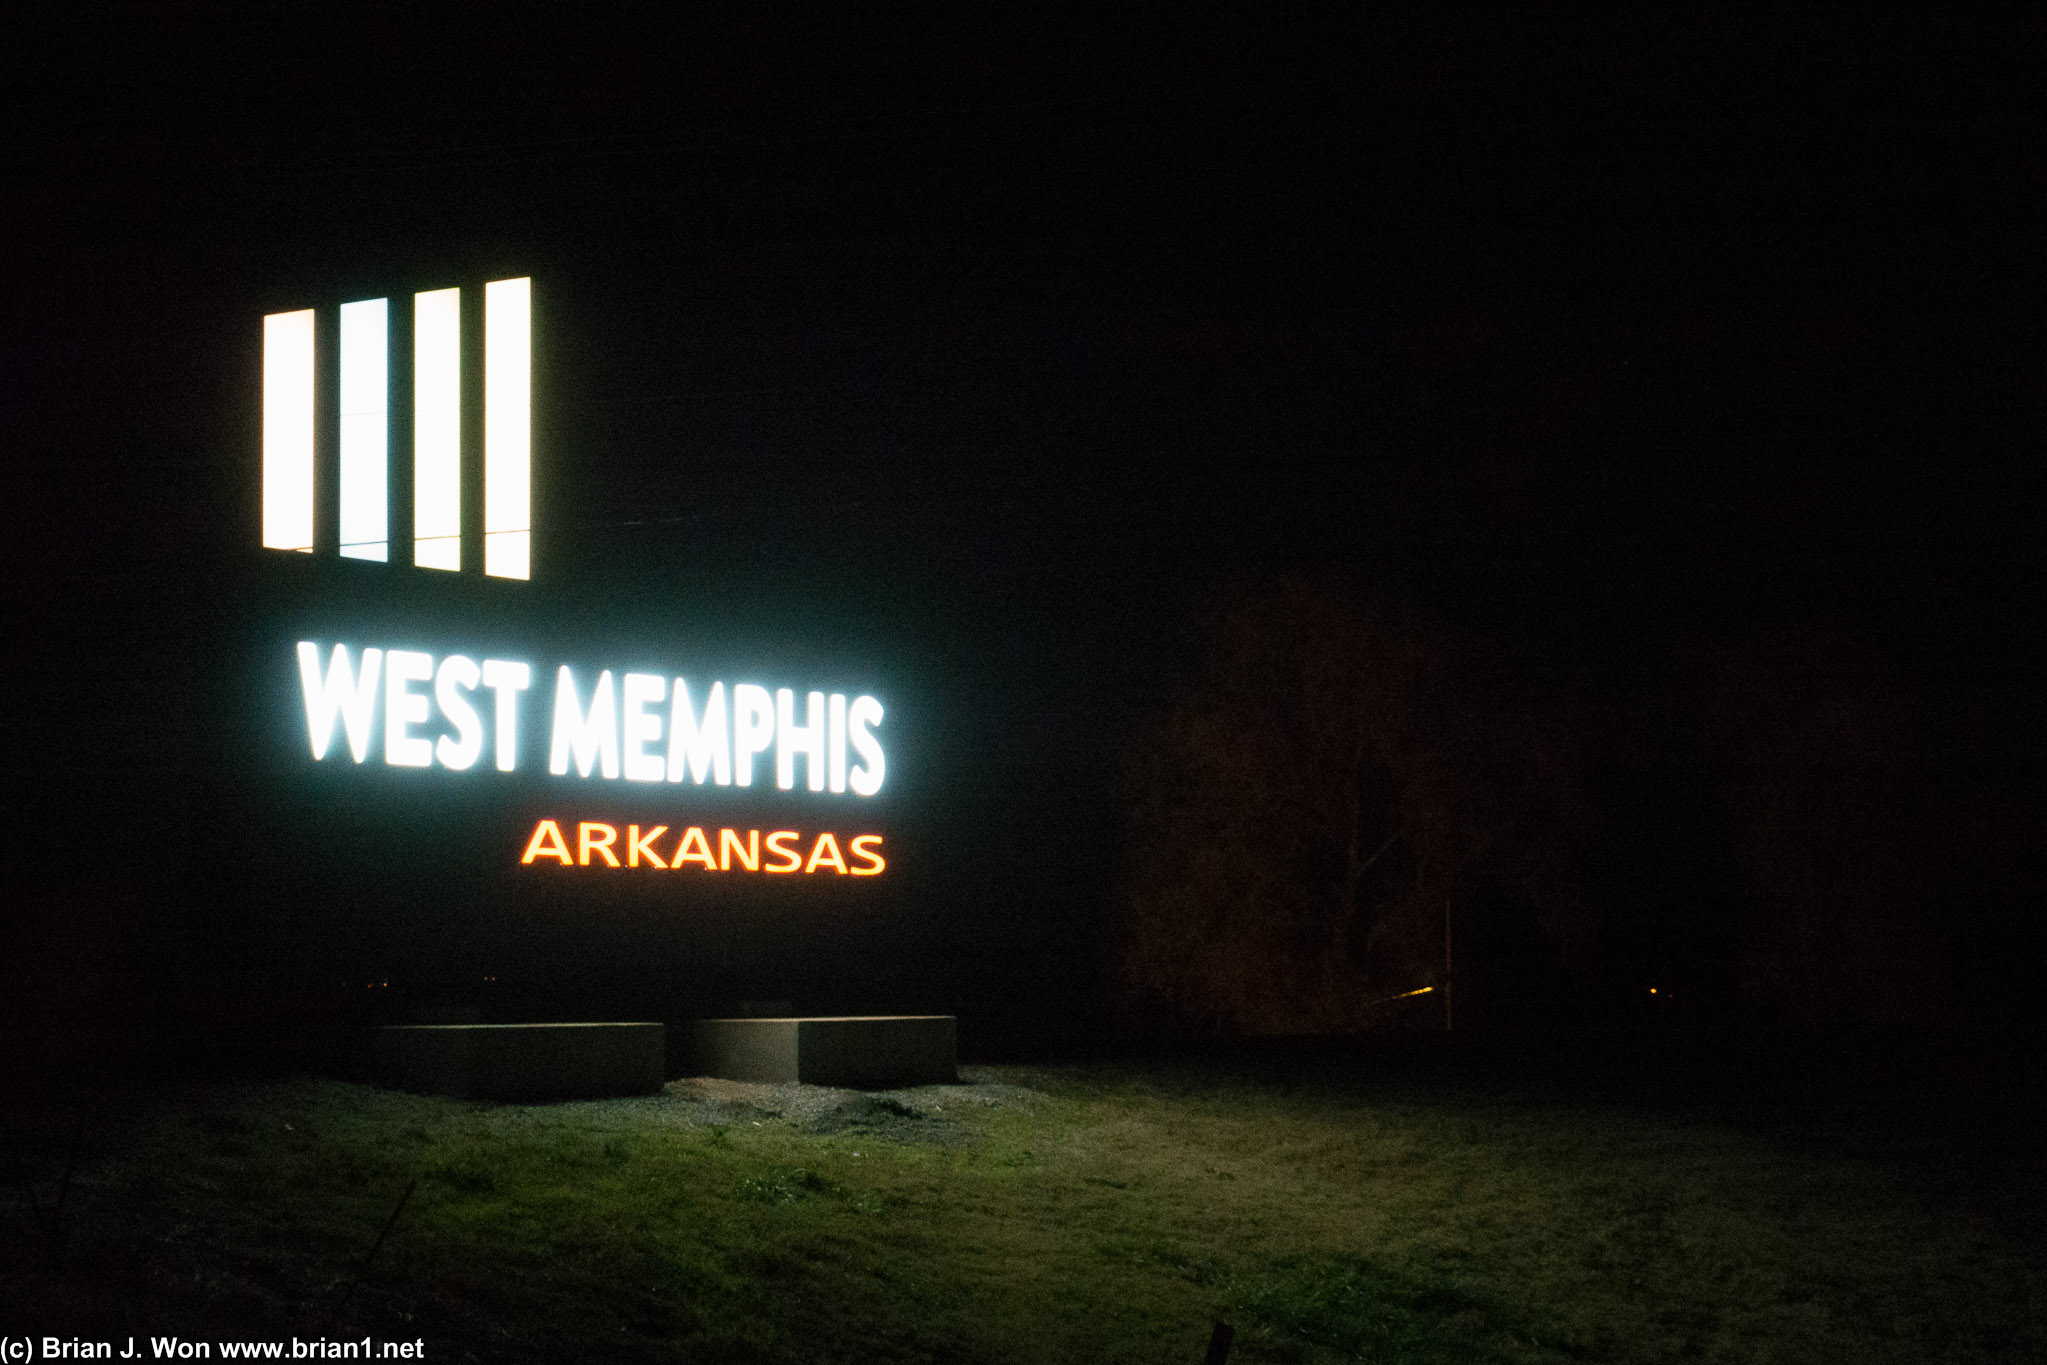 New state achieved: Arkansas.